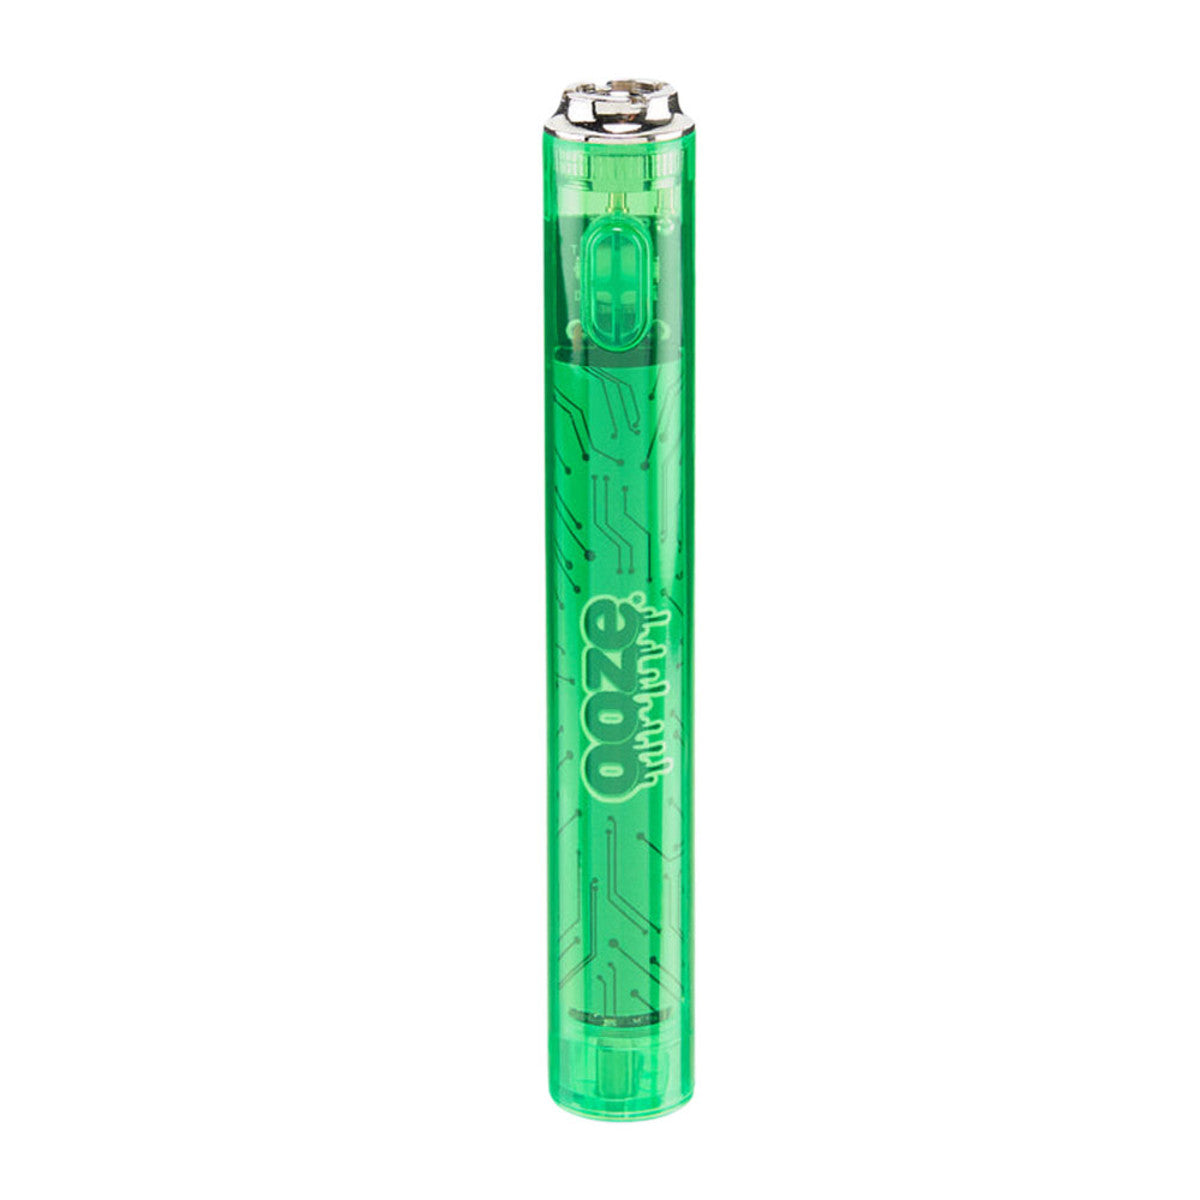 Ooze Slim Clear Series 510 Vape Cartridge Battery Slime Green